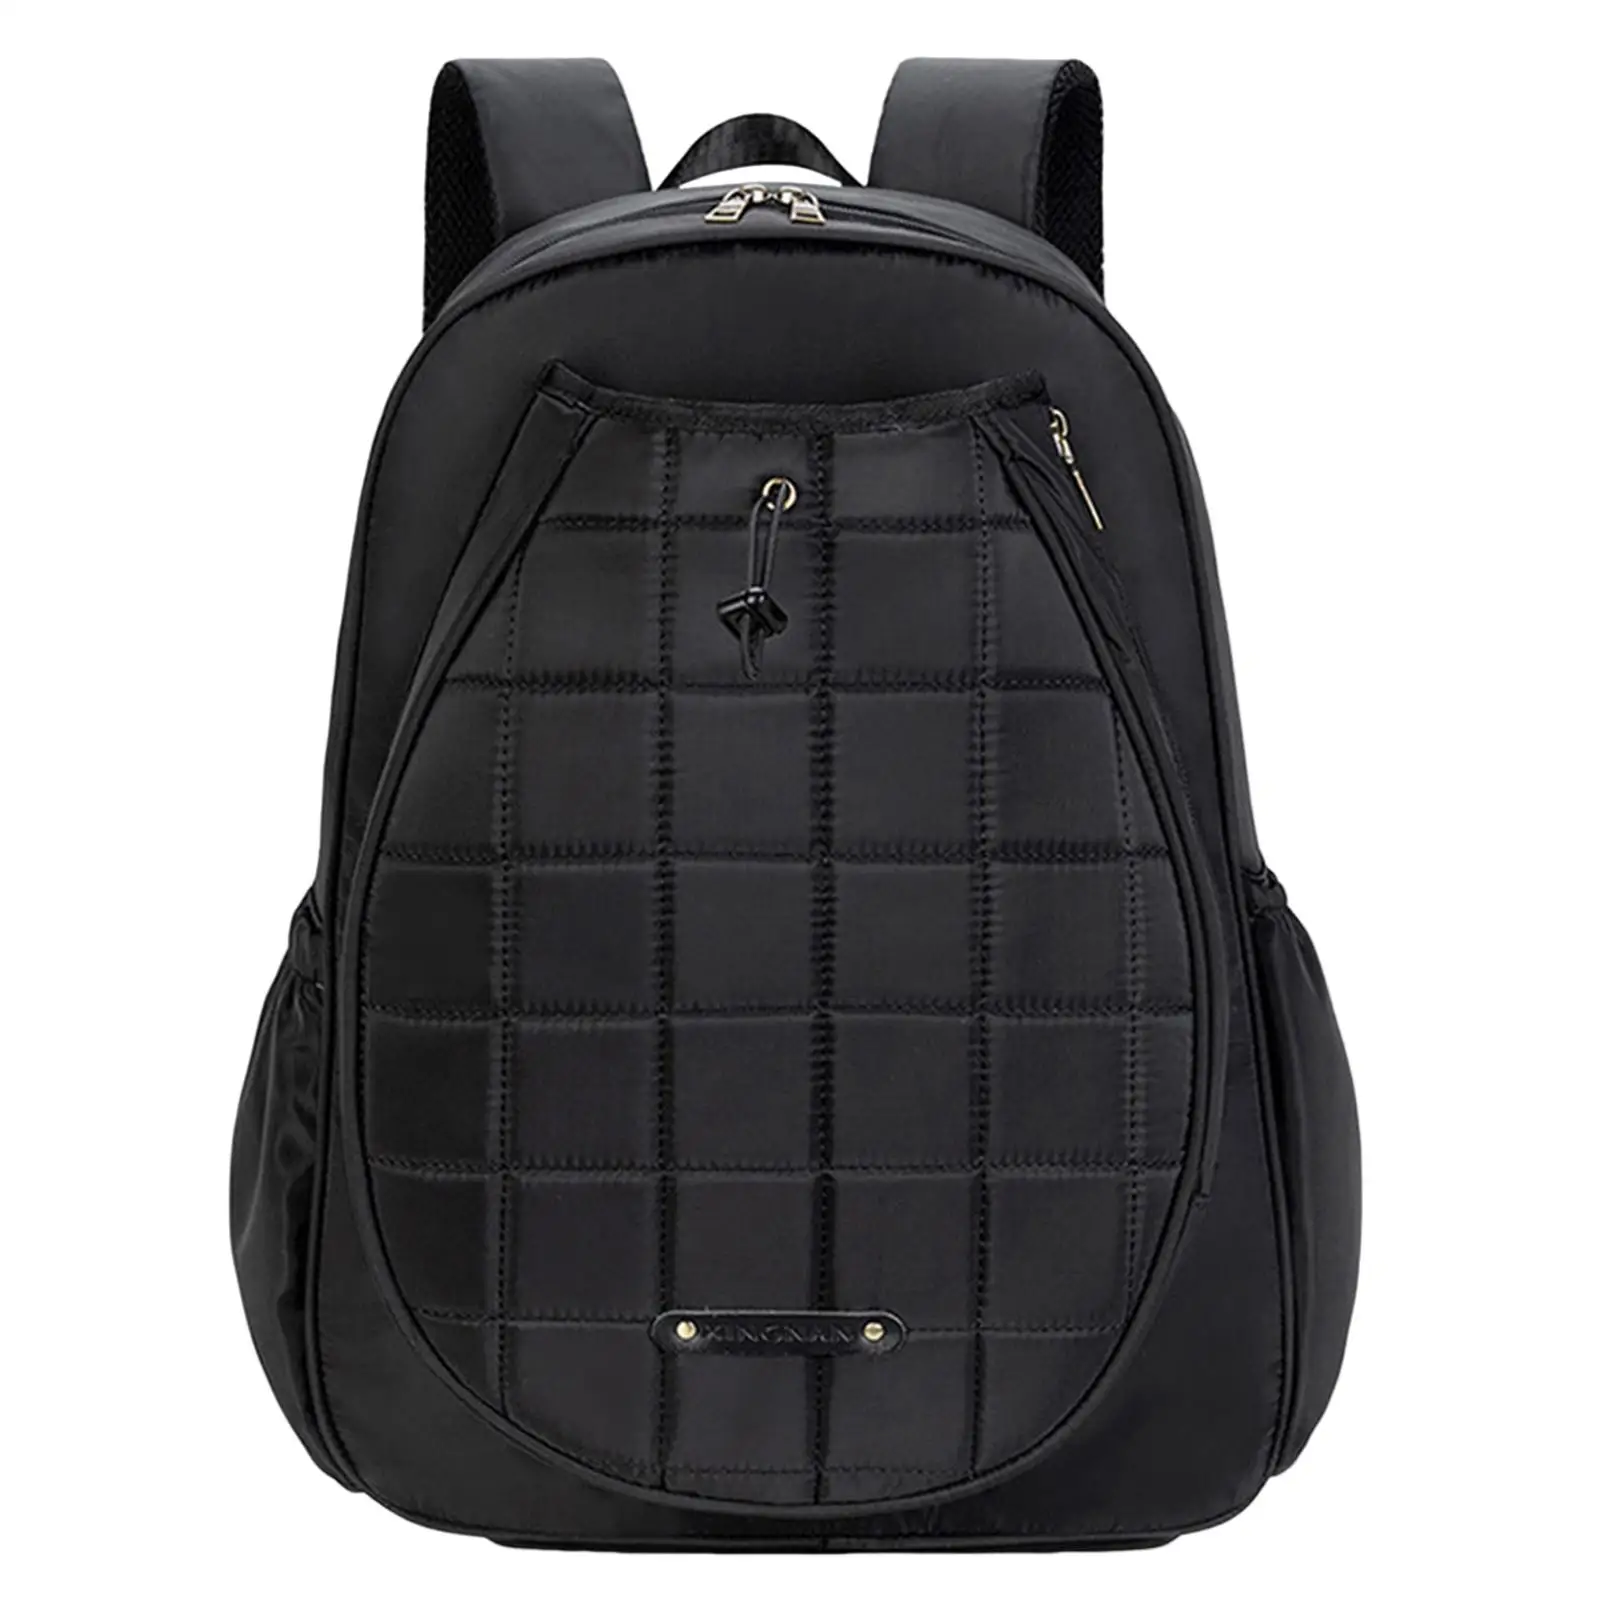 Tennis Backpack Tennis Bag Racquet Cover for Tennis Racket Balls Accessories